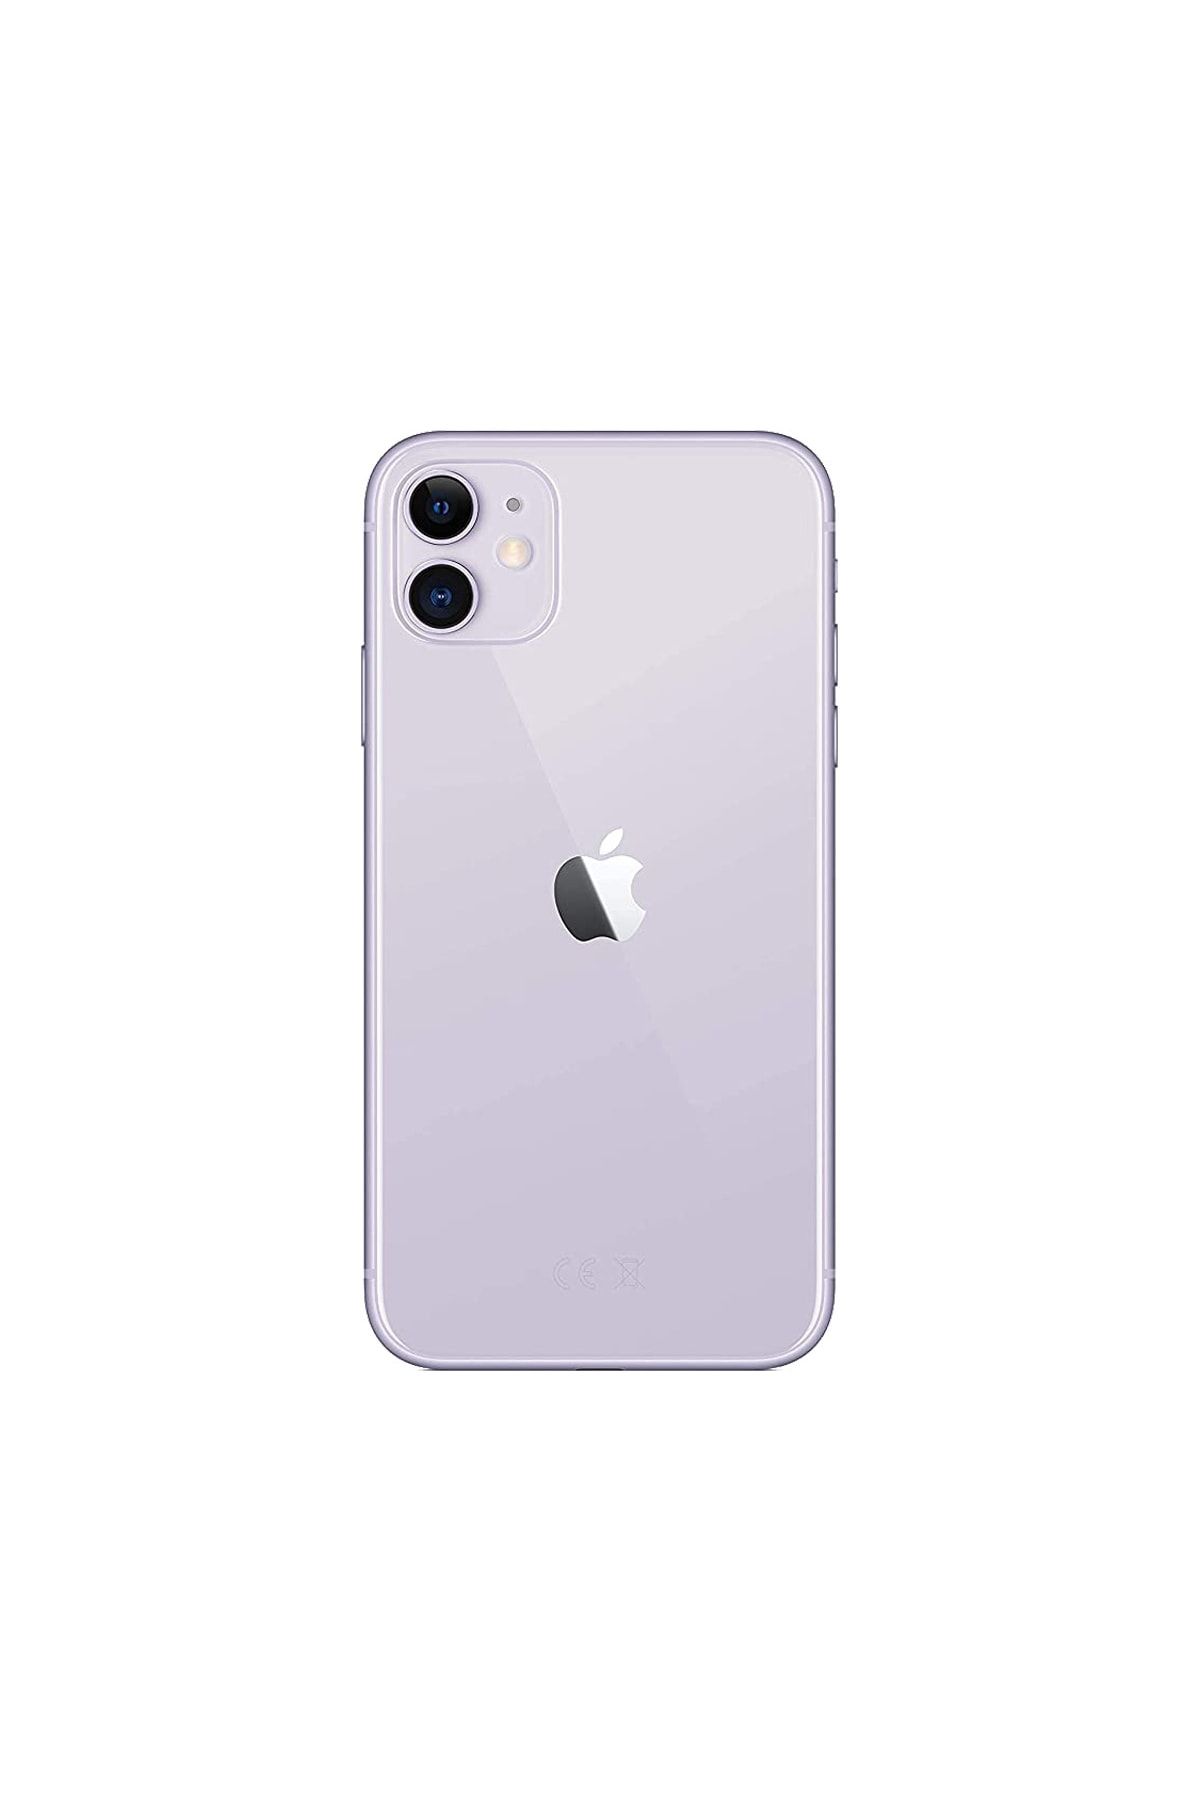 Apple Yenilenmiş iPhone 11 64 GB Mor Cep Telefonu (12 Ay Garantili) - A Kalite